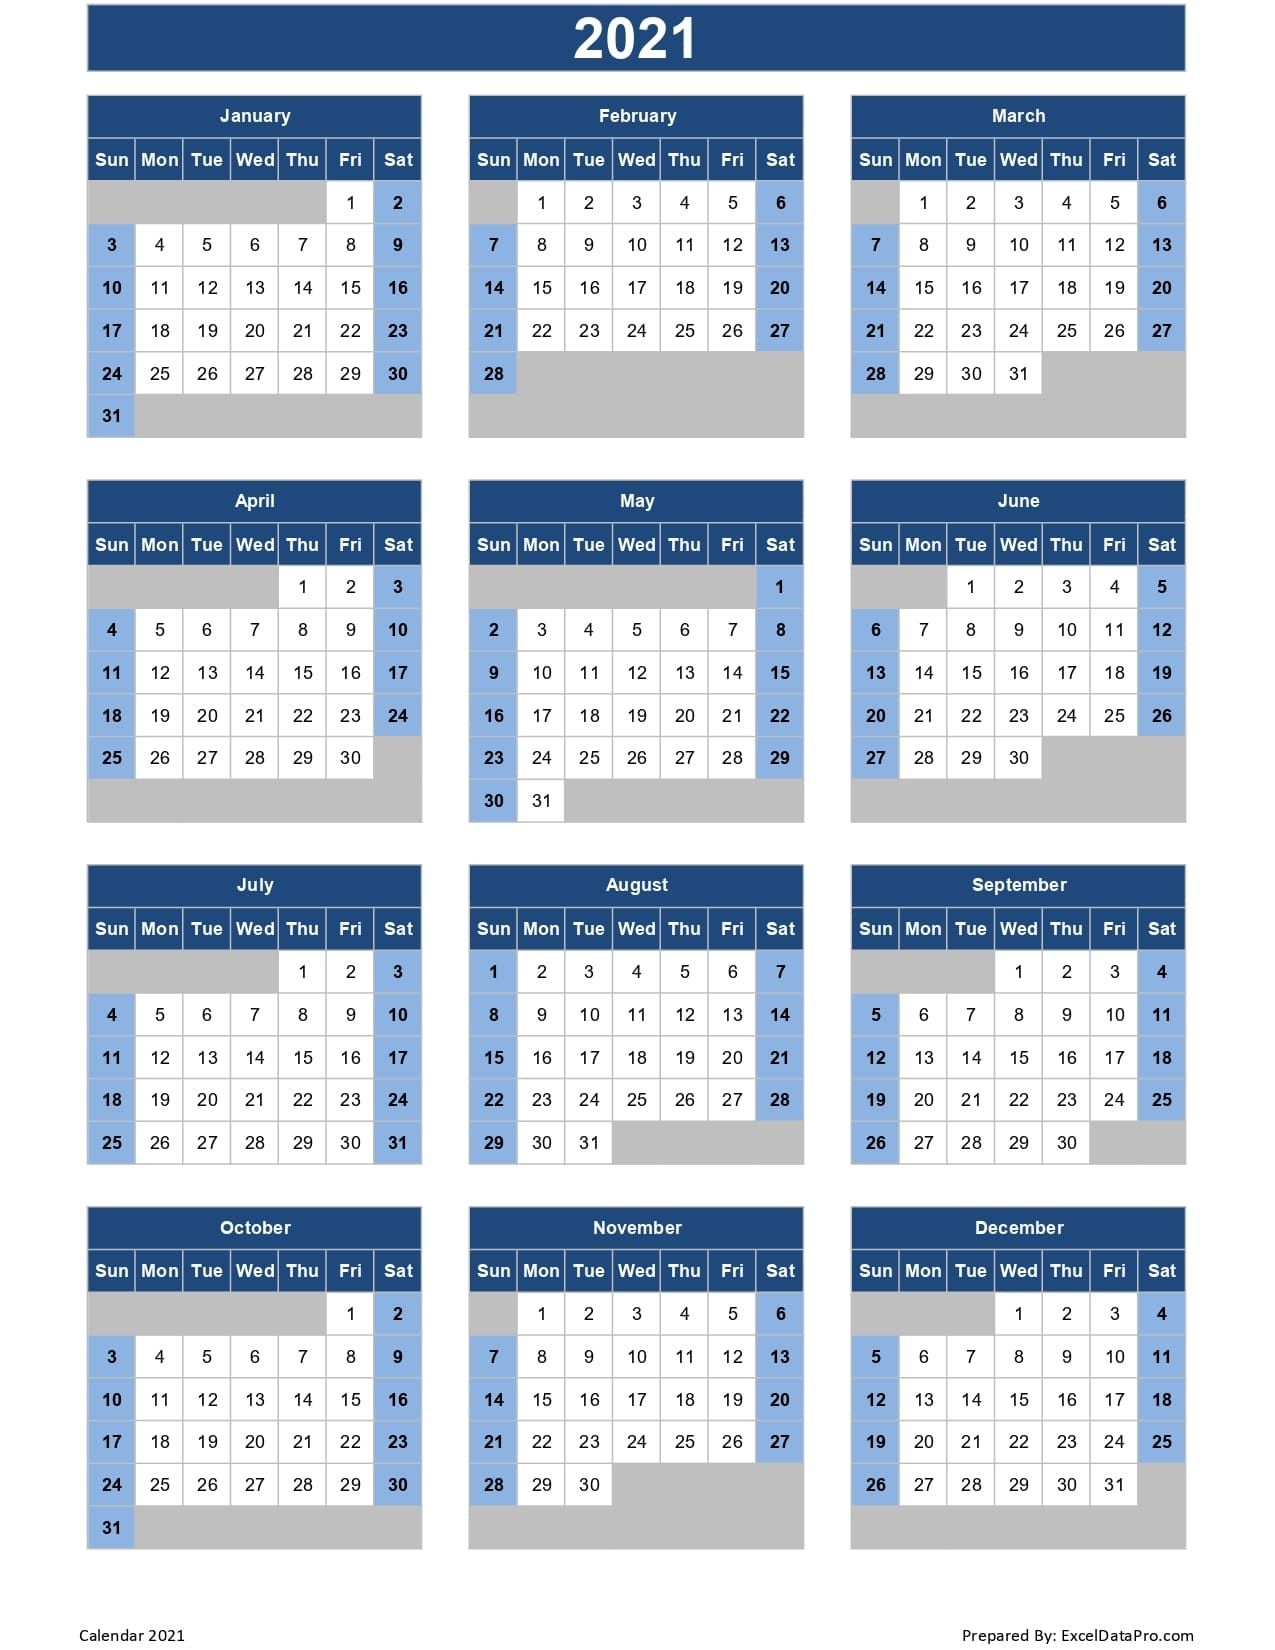 calendar 2021 excel templates, printable pdfs &amp; images